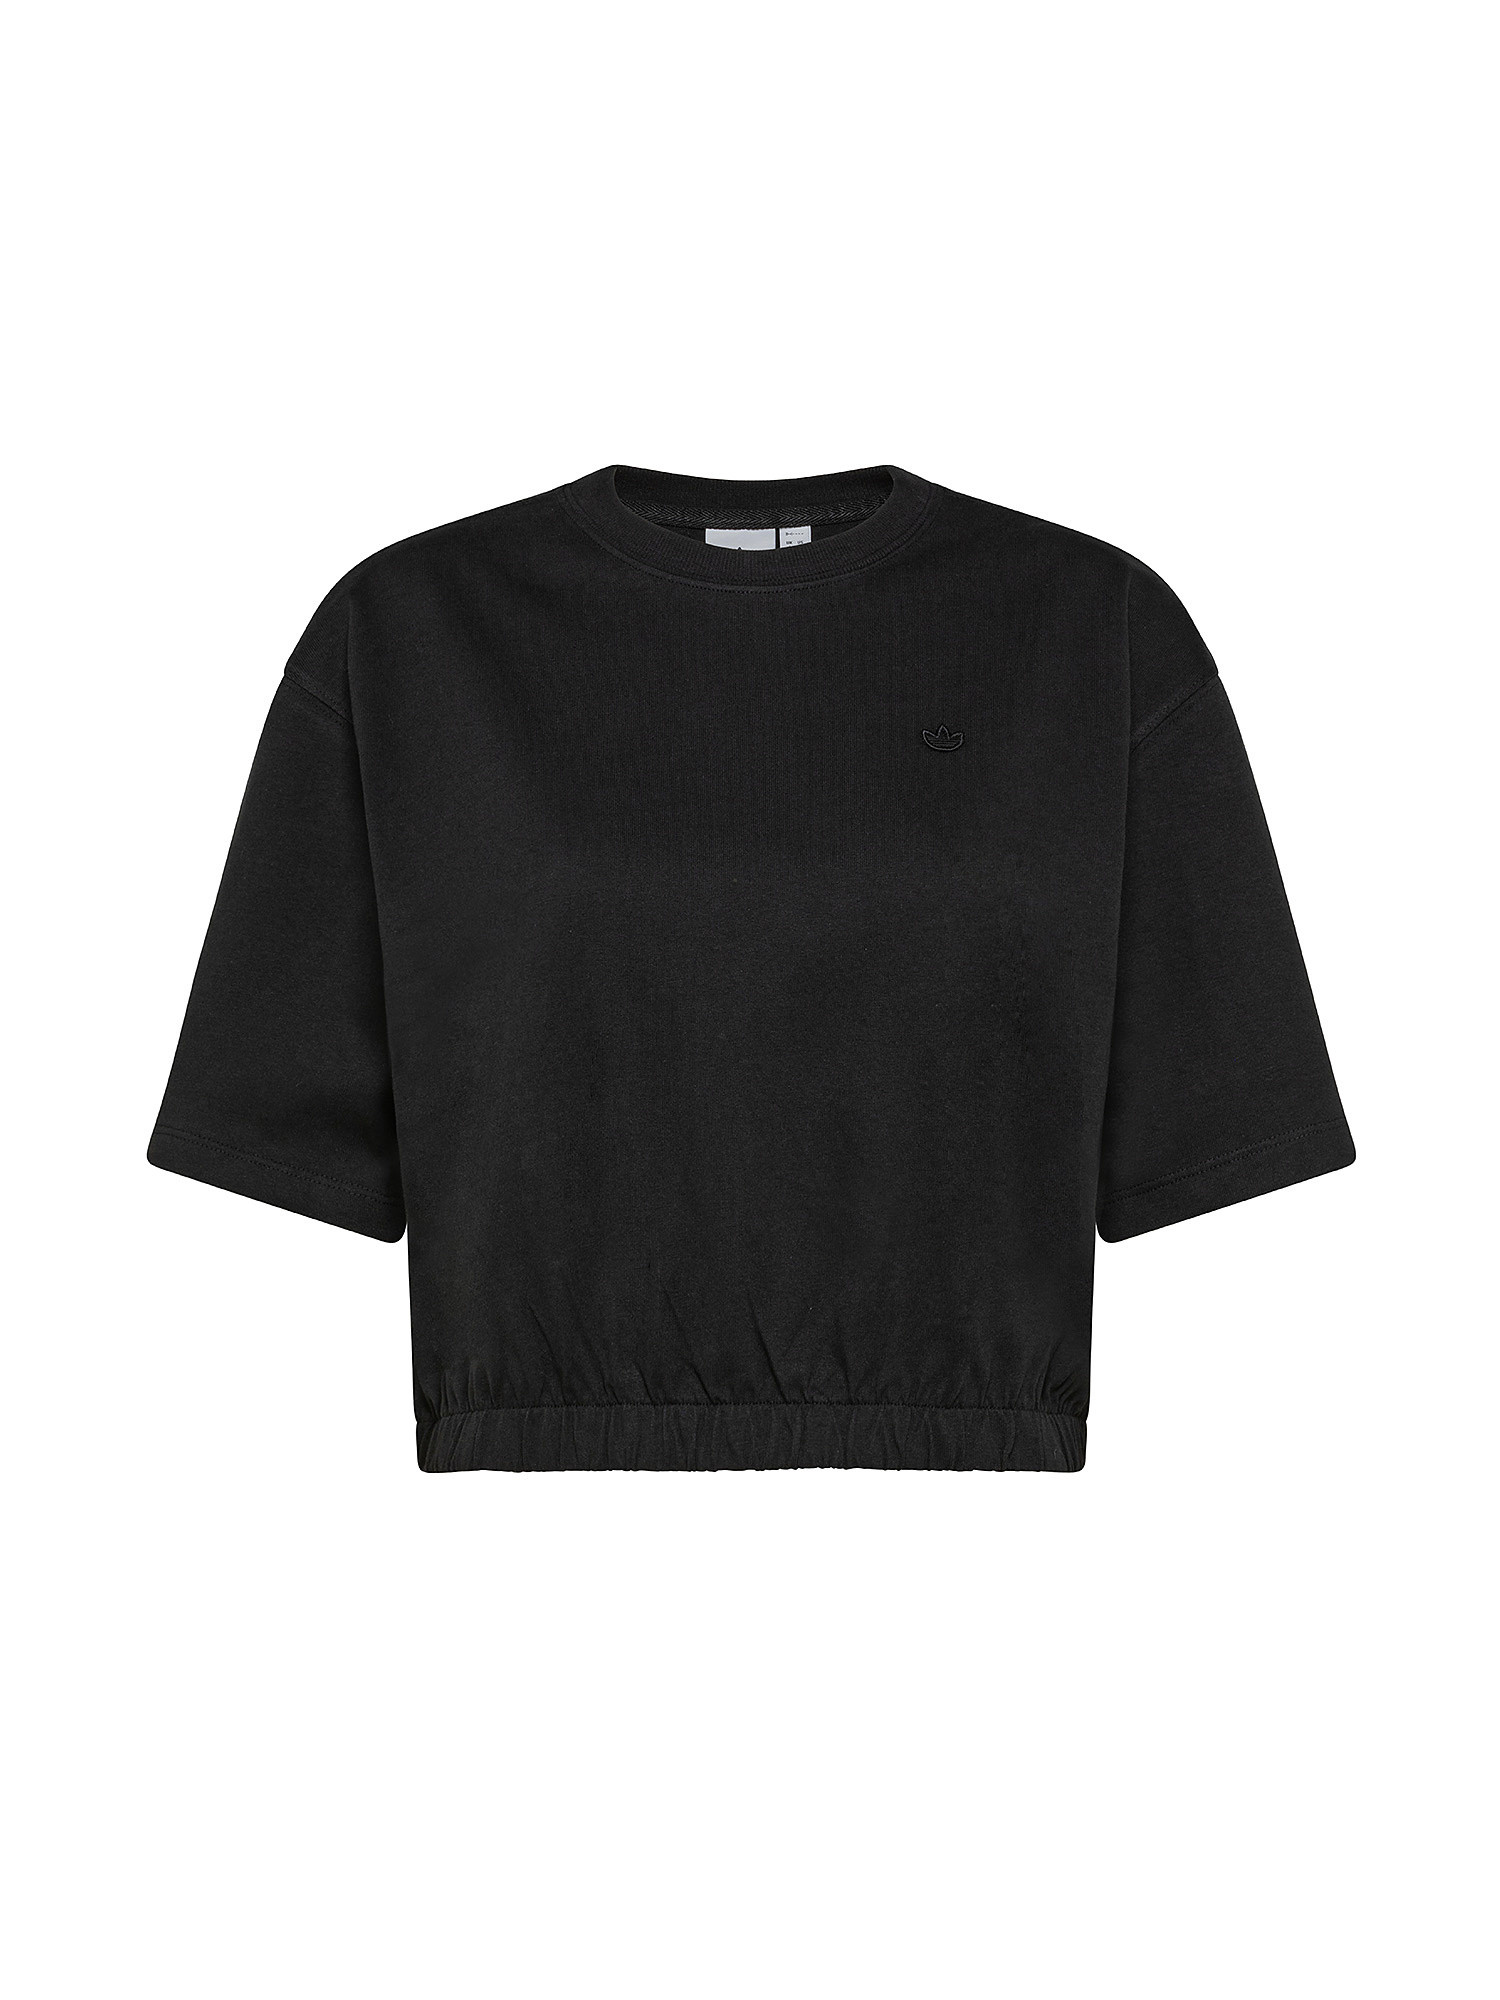 Adidas - T-shirt adicolor, Black, large image number 0